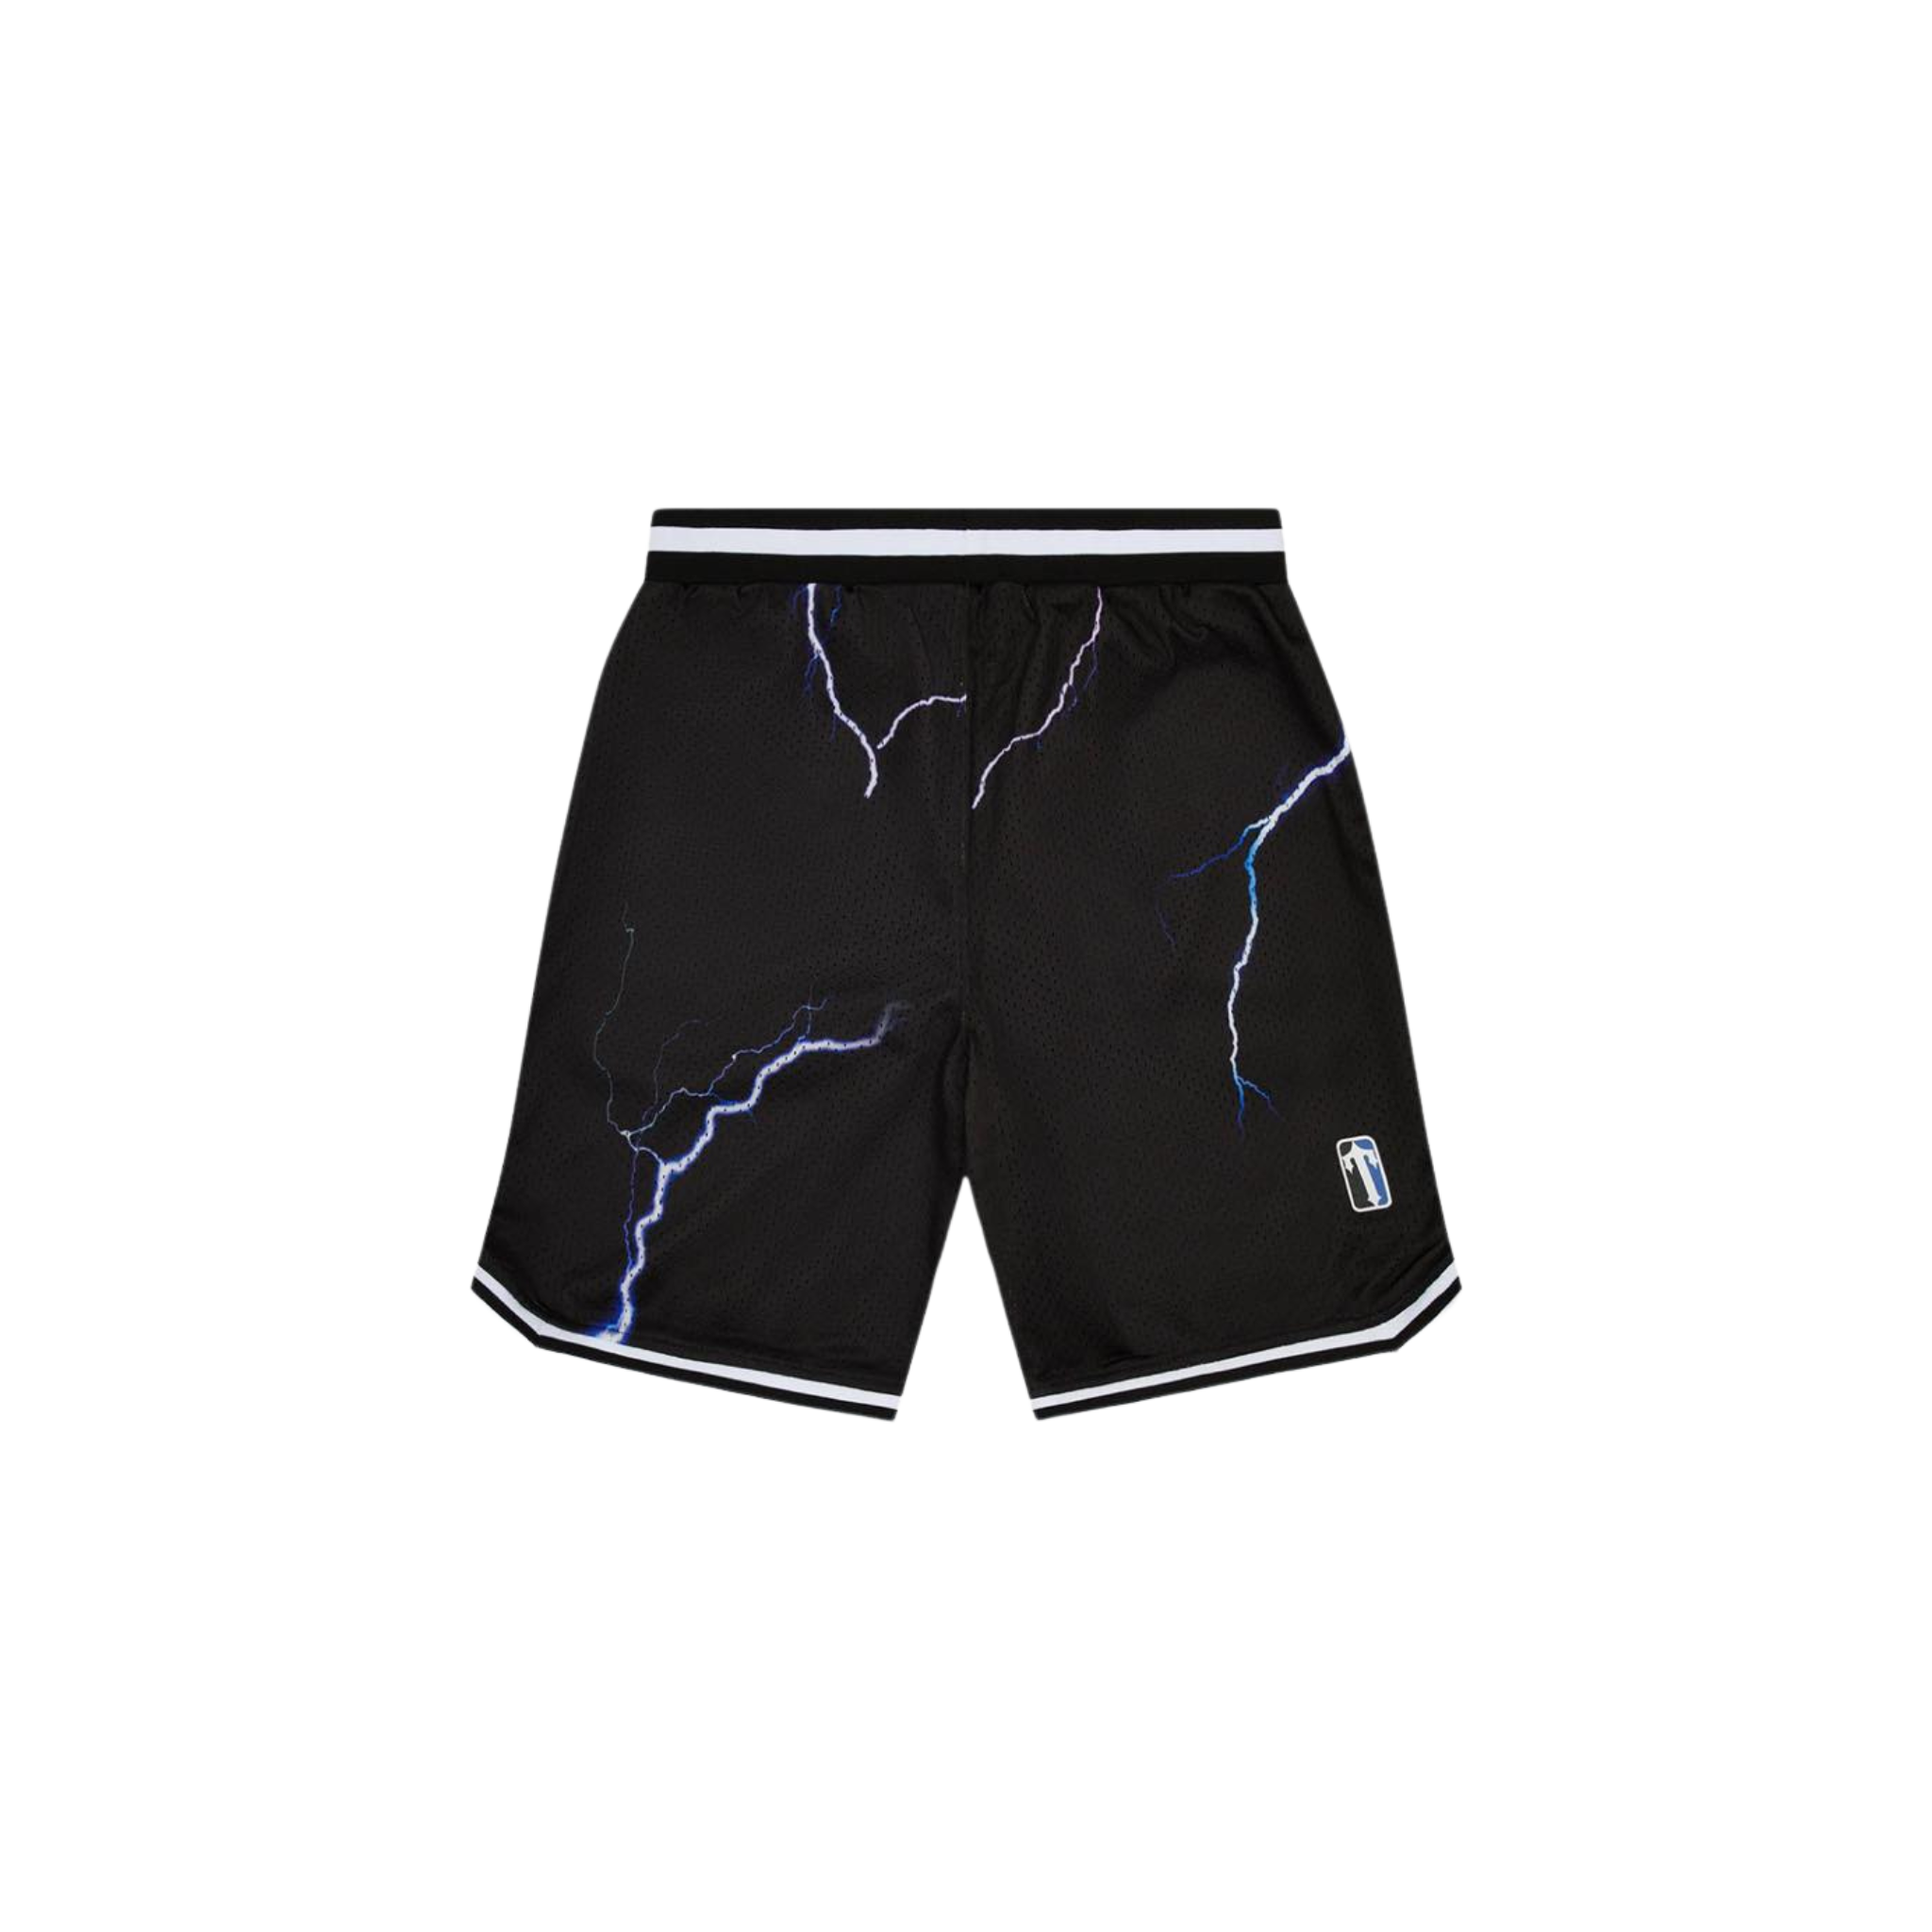 Trapstar Irongate Arch Basketball Shorts Lighting Edition Black